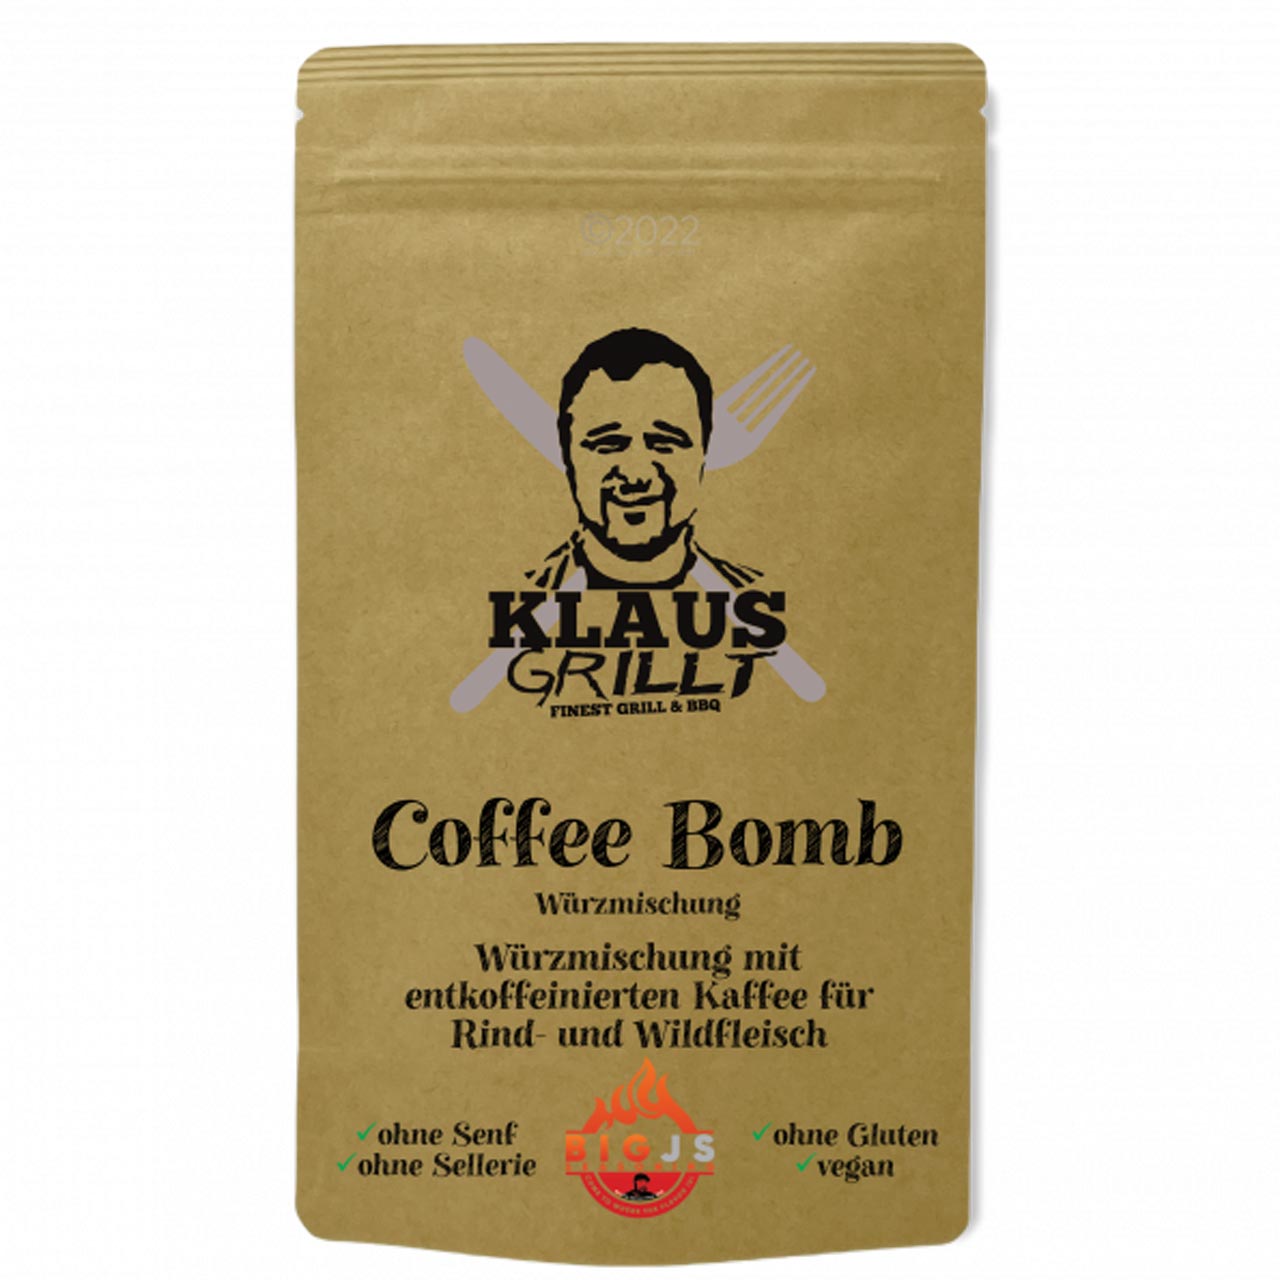 Klaus Grillt - Coffee Bomb Rub 250 g Standbeutel